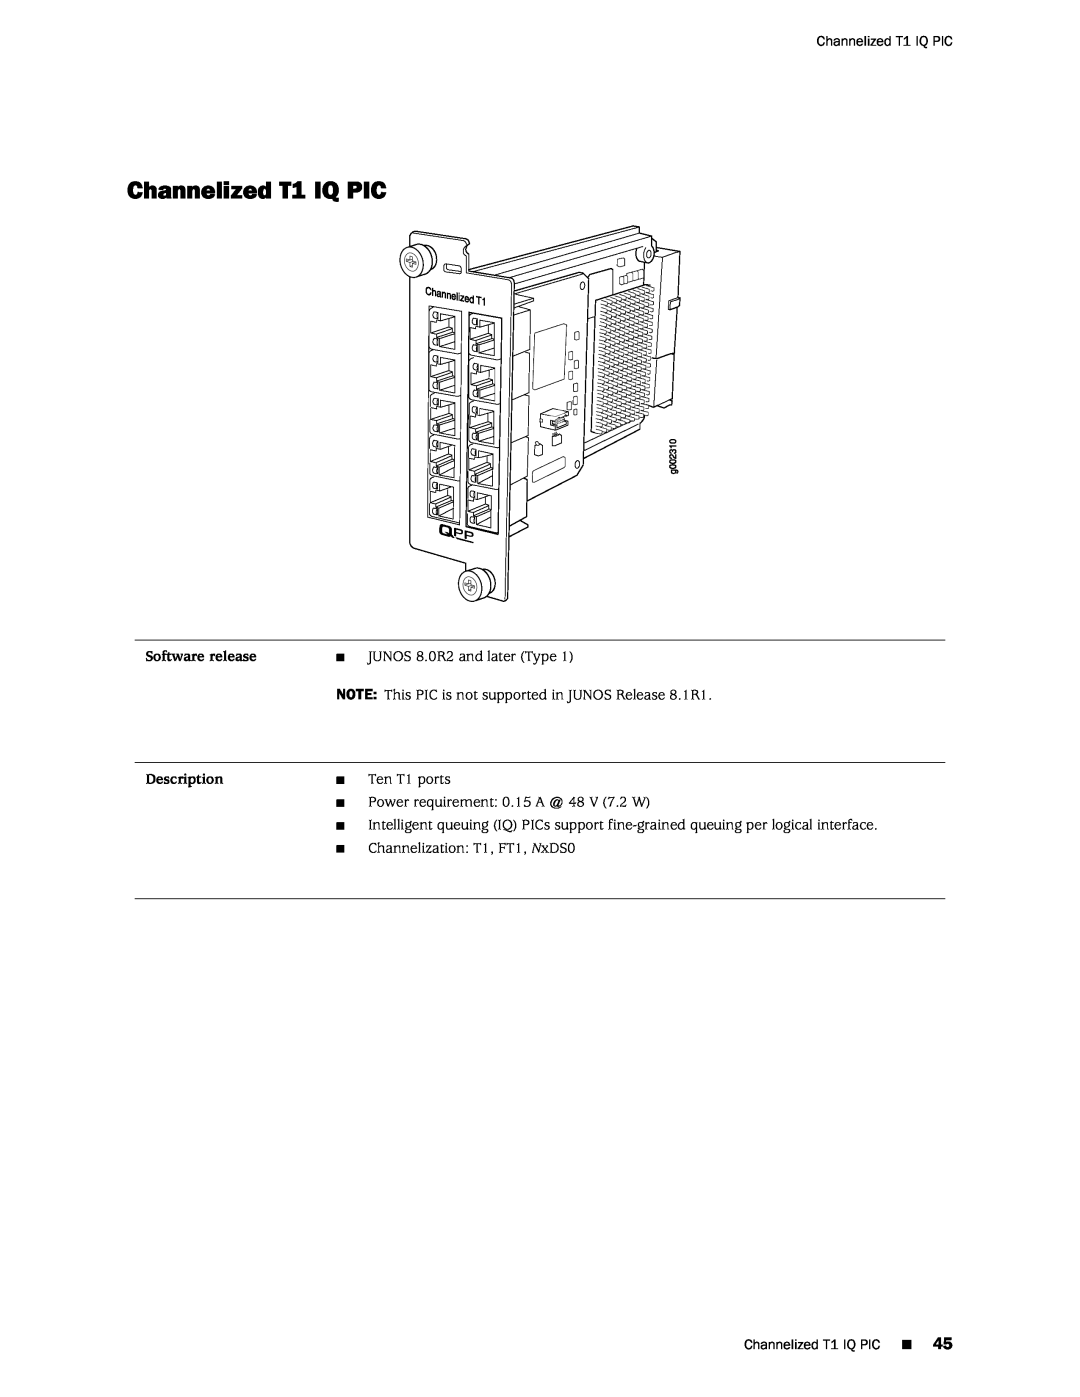 Juniper Networks M120 manual Channelized T1 IQ PIC, Software release, Description 